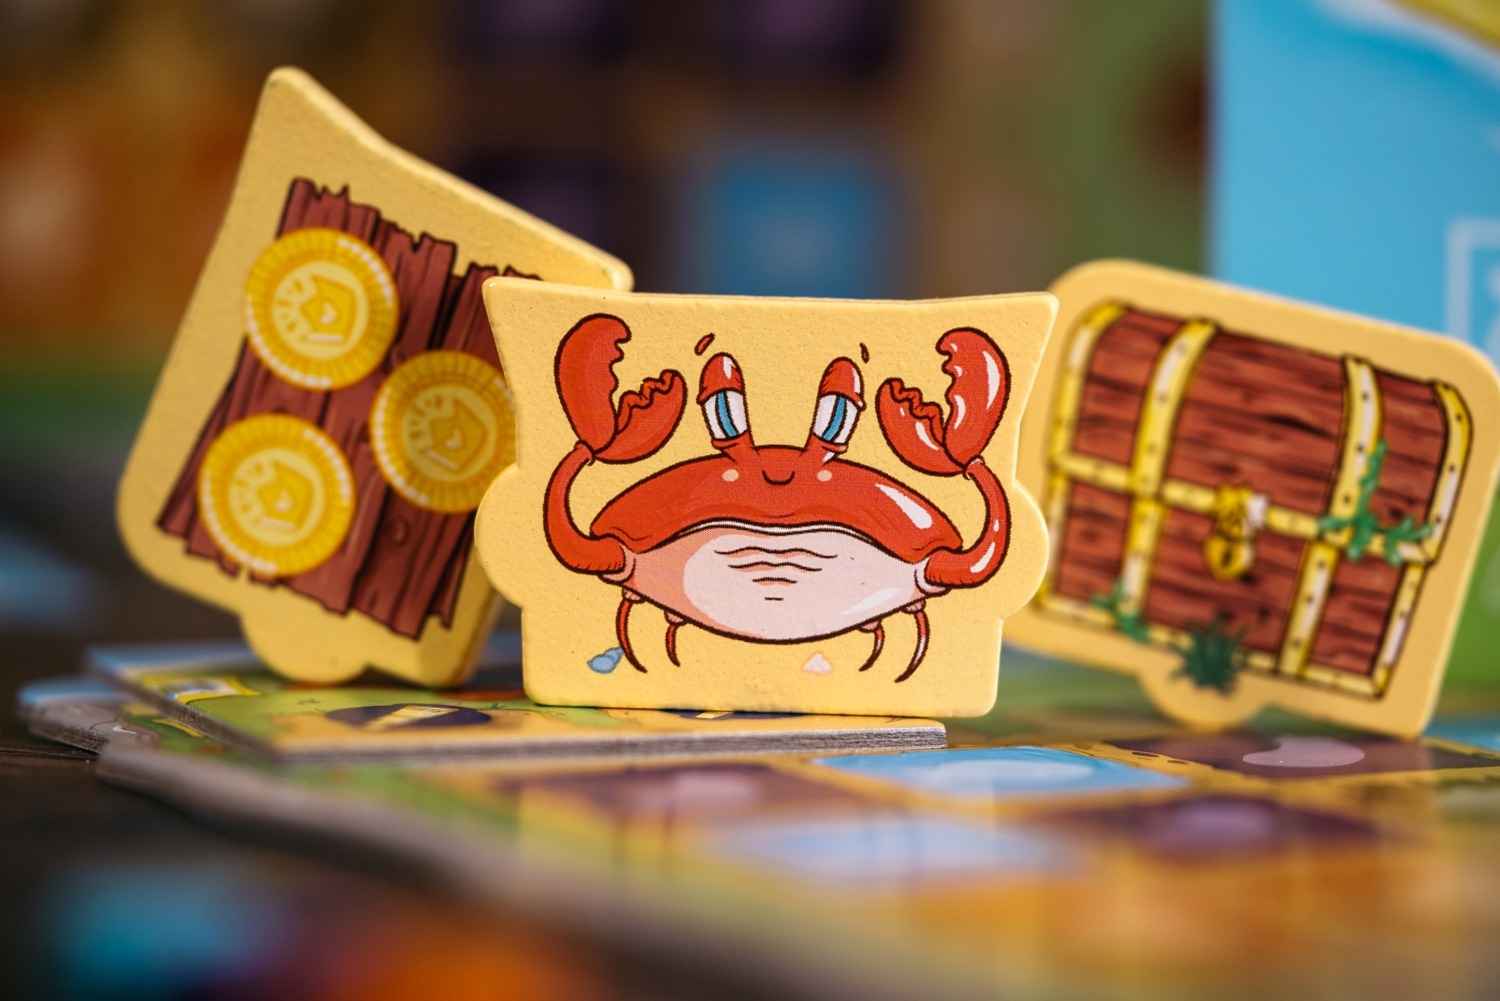 Bingo Island Grrre Games jeu de société enfant board game